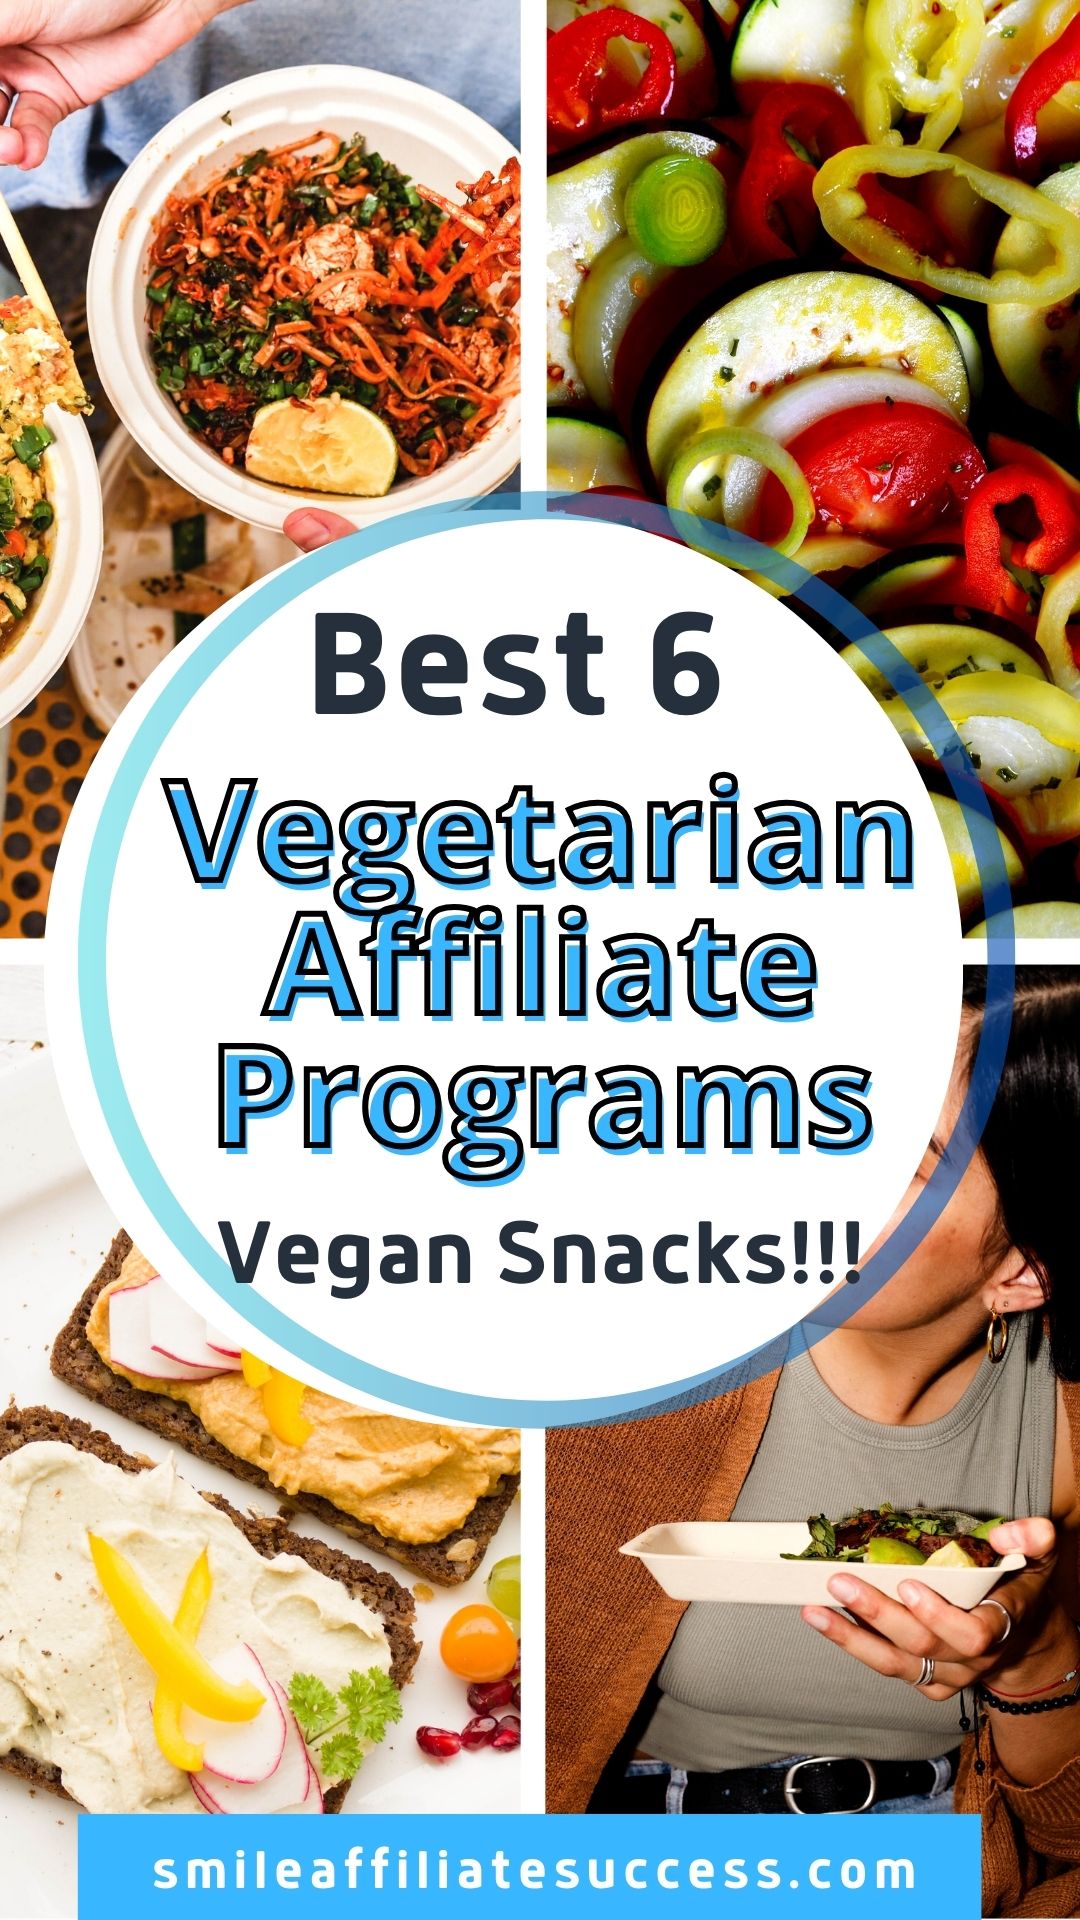 Best 6 Vegetarian Affiliate Programs